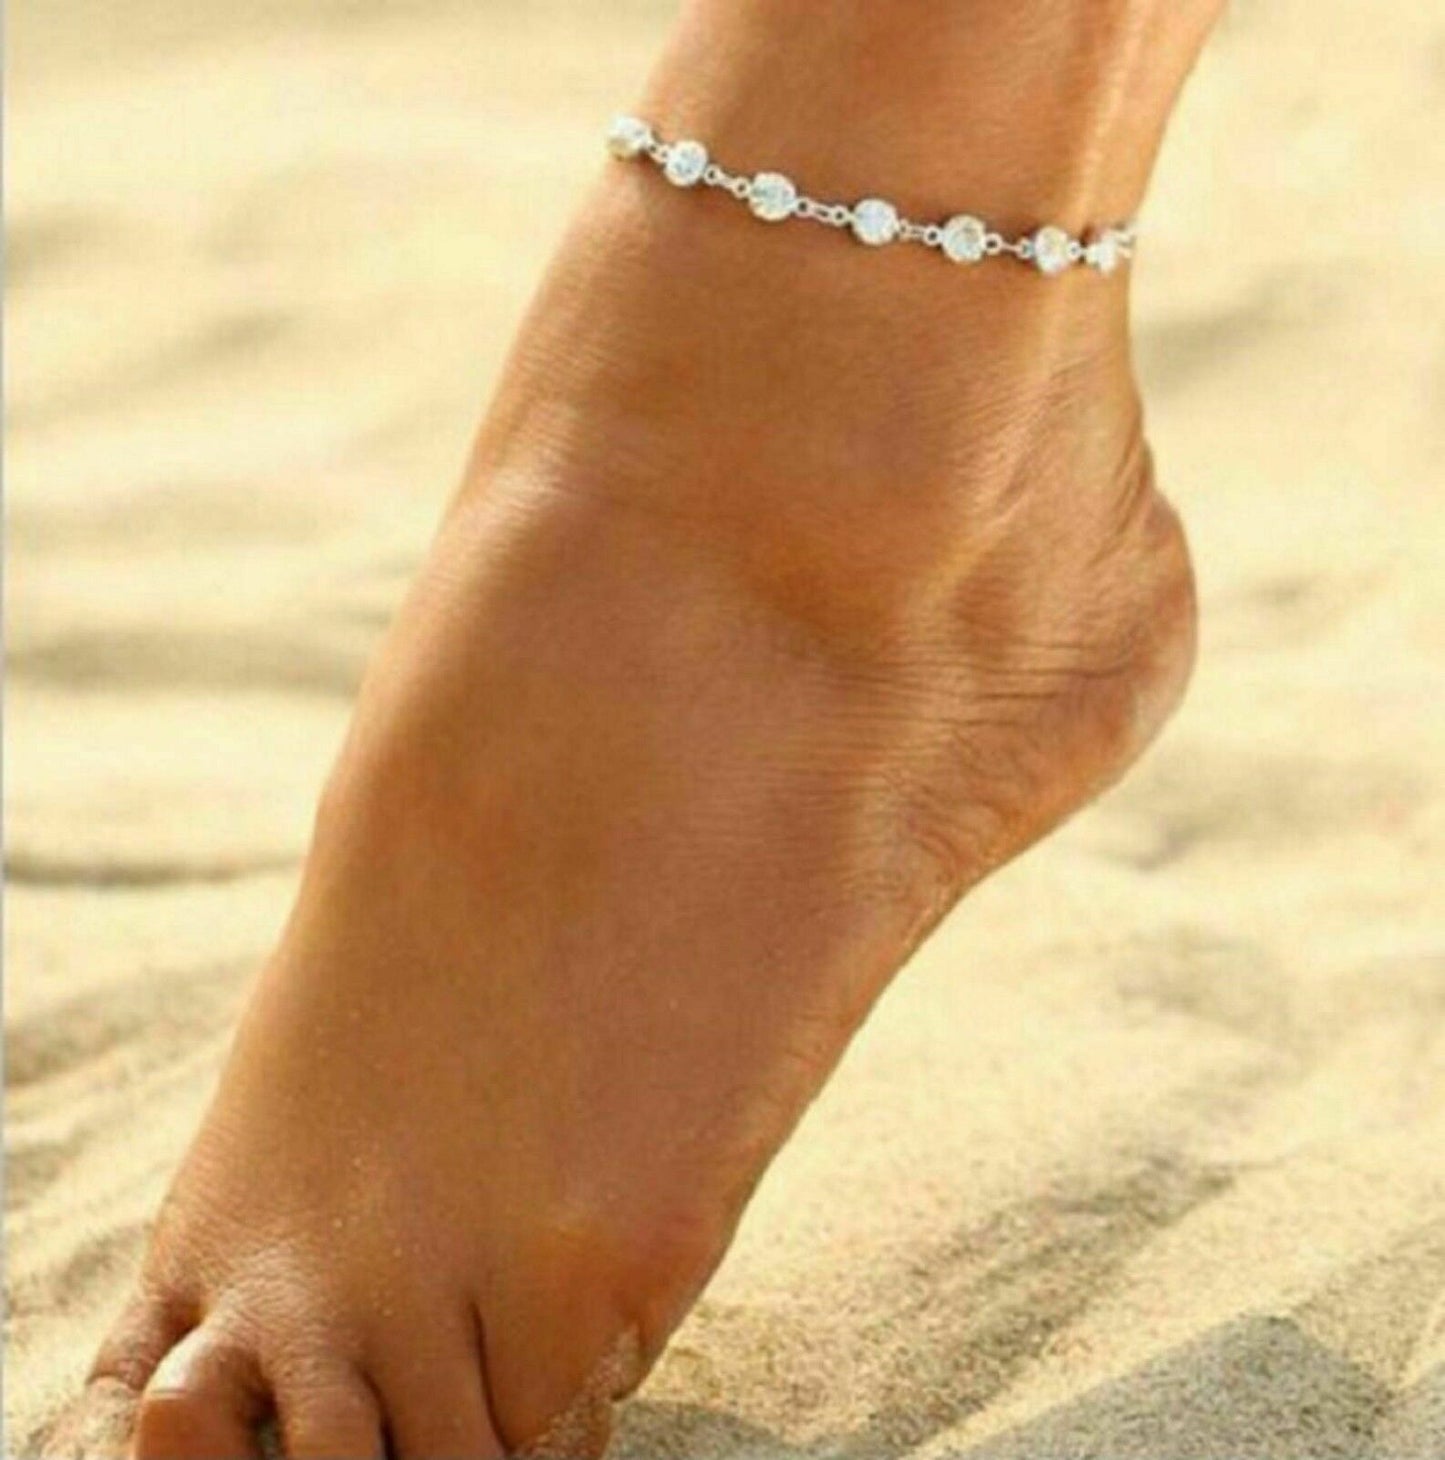 Silver Gemstone Chain Anklet